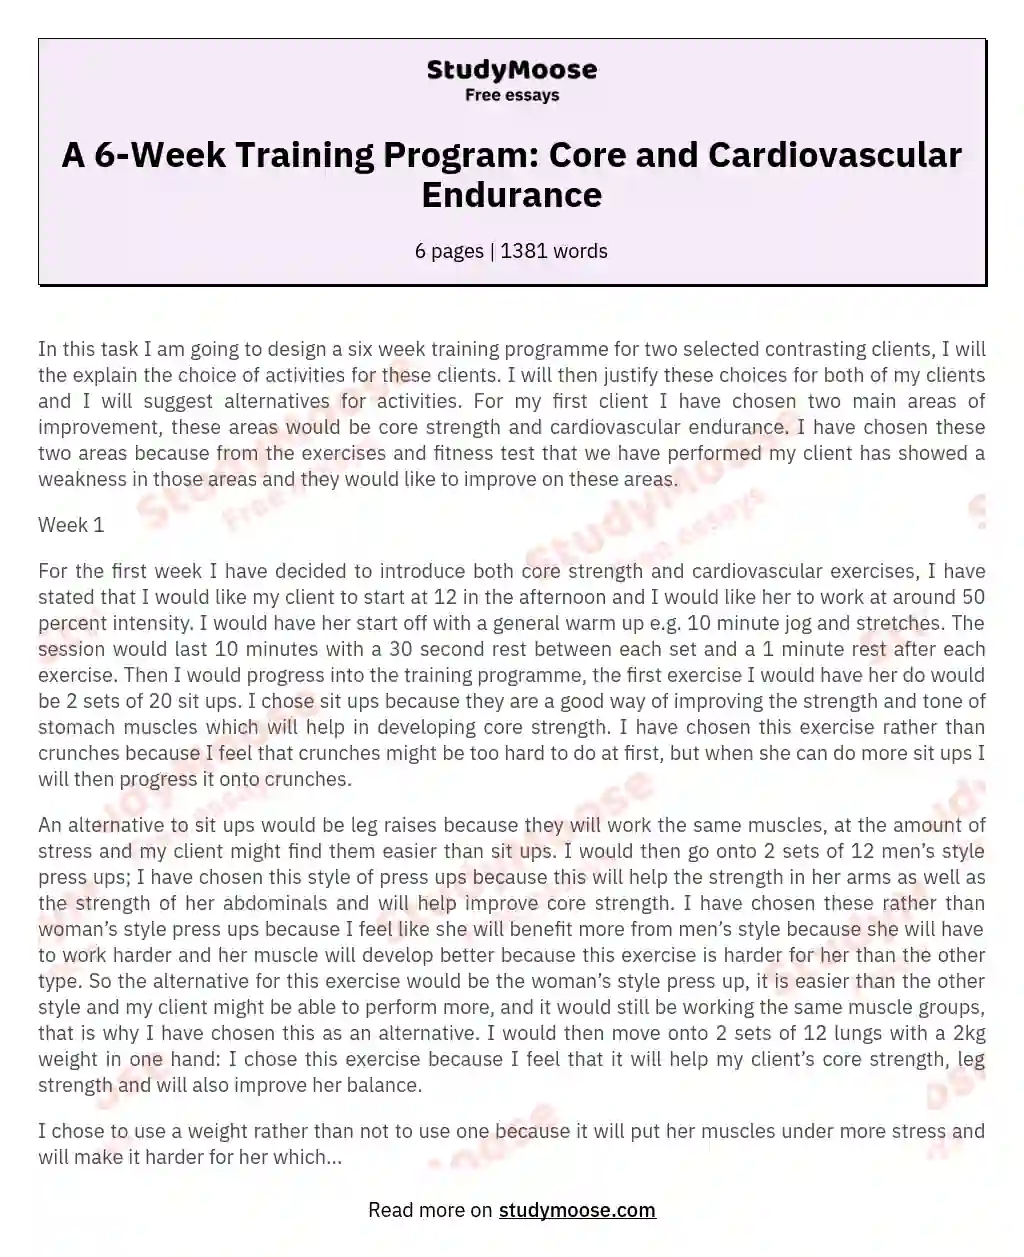 A 6-Week Training Program: Core and Cardiovascular Endurance essay